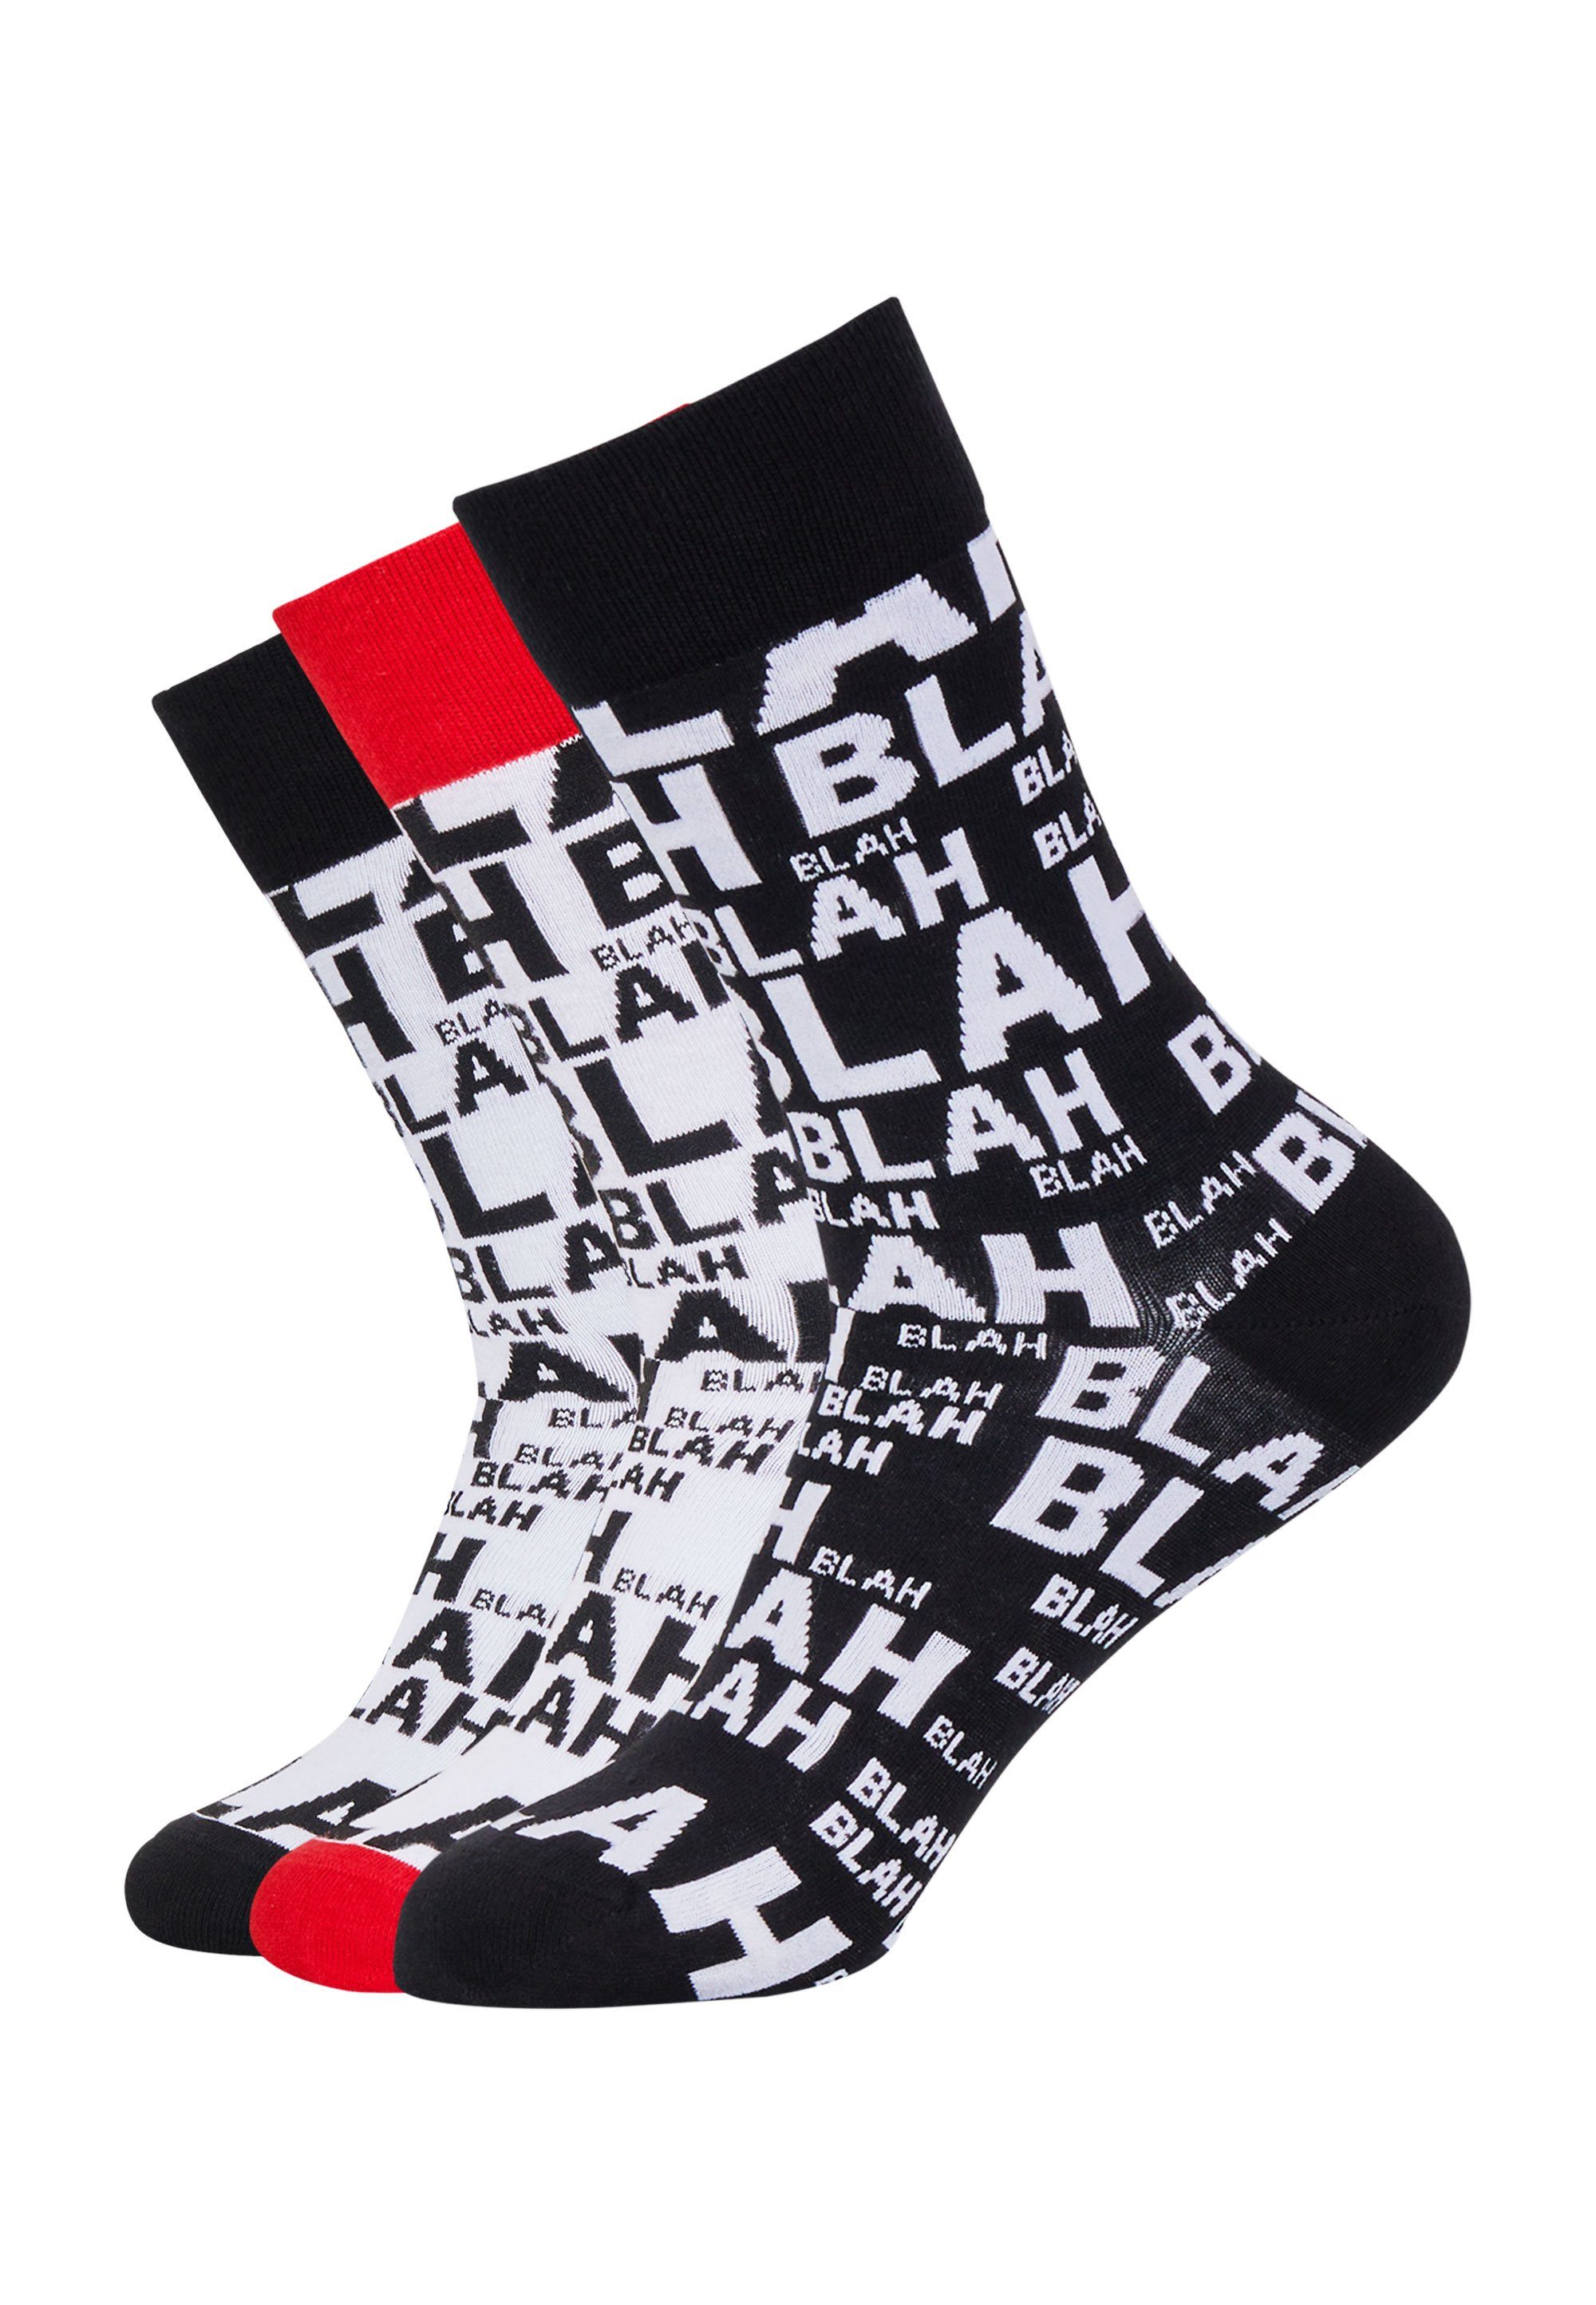 Mxthersocker Socken UNHINGED - BLAH-BLAH (3-Paar) mit trendigem Schriftzug dunkelgrau, schwarz